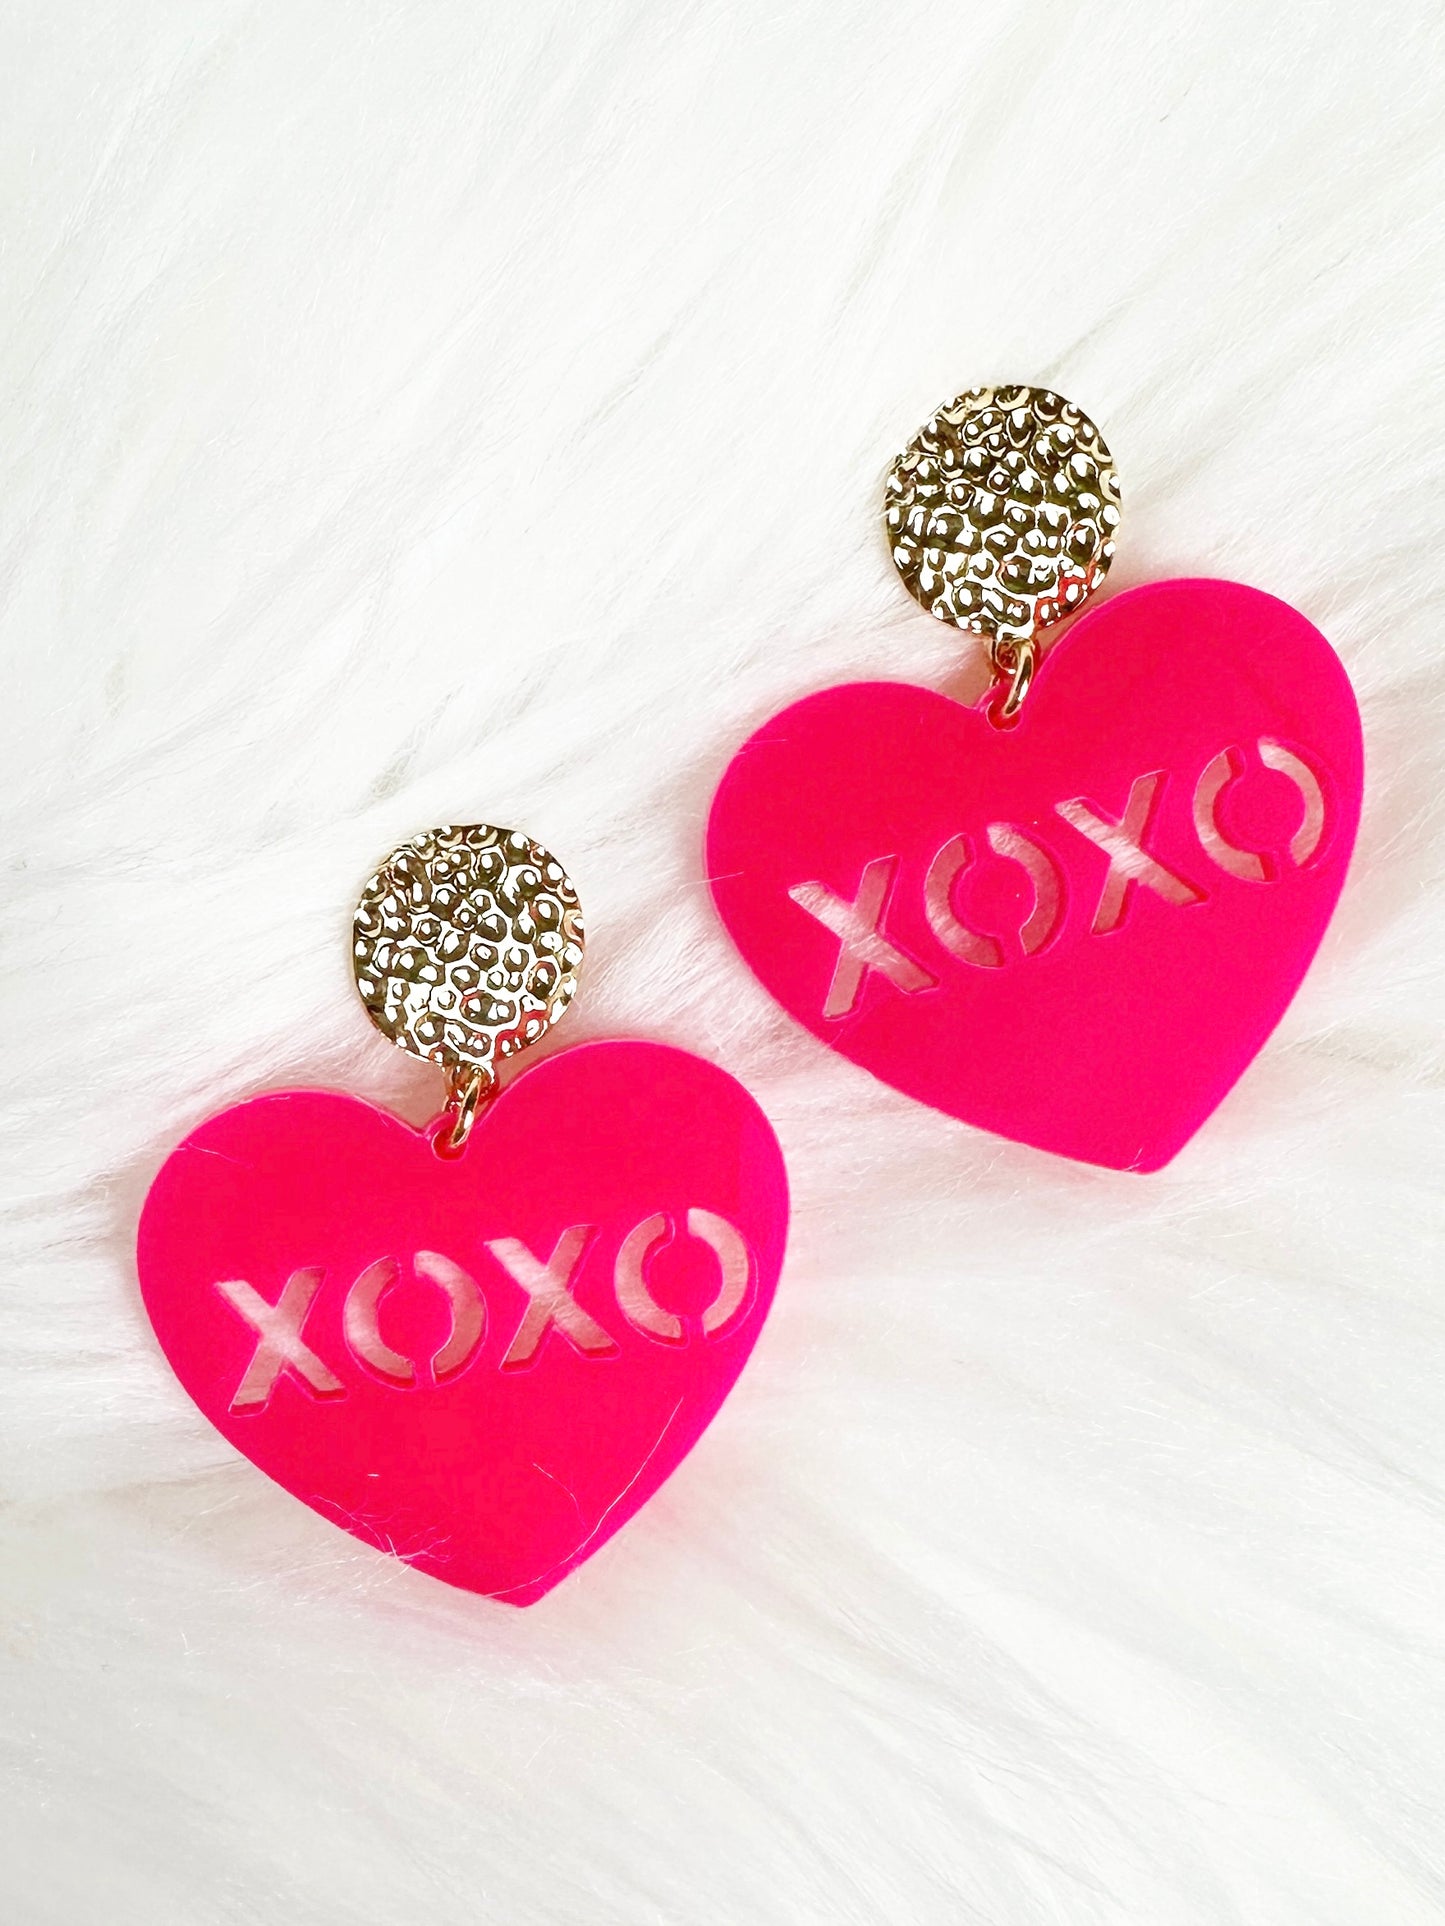 Hot Pink XOXO Heart earrings